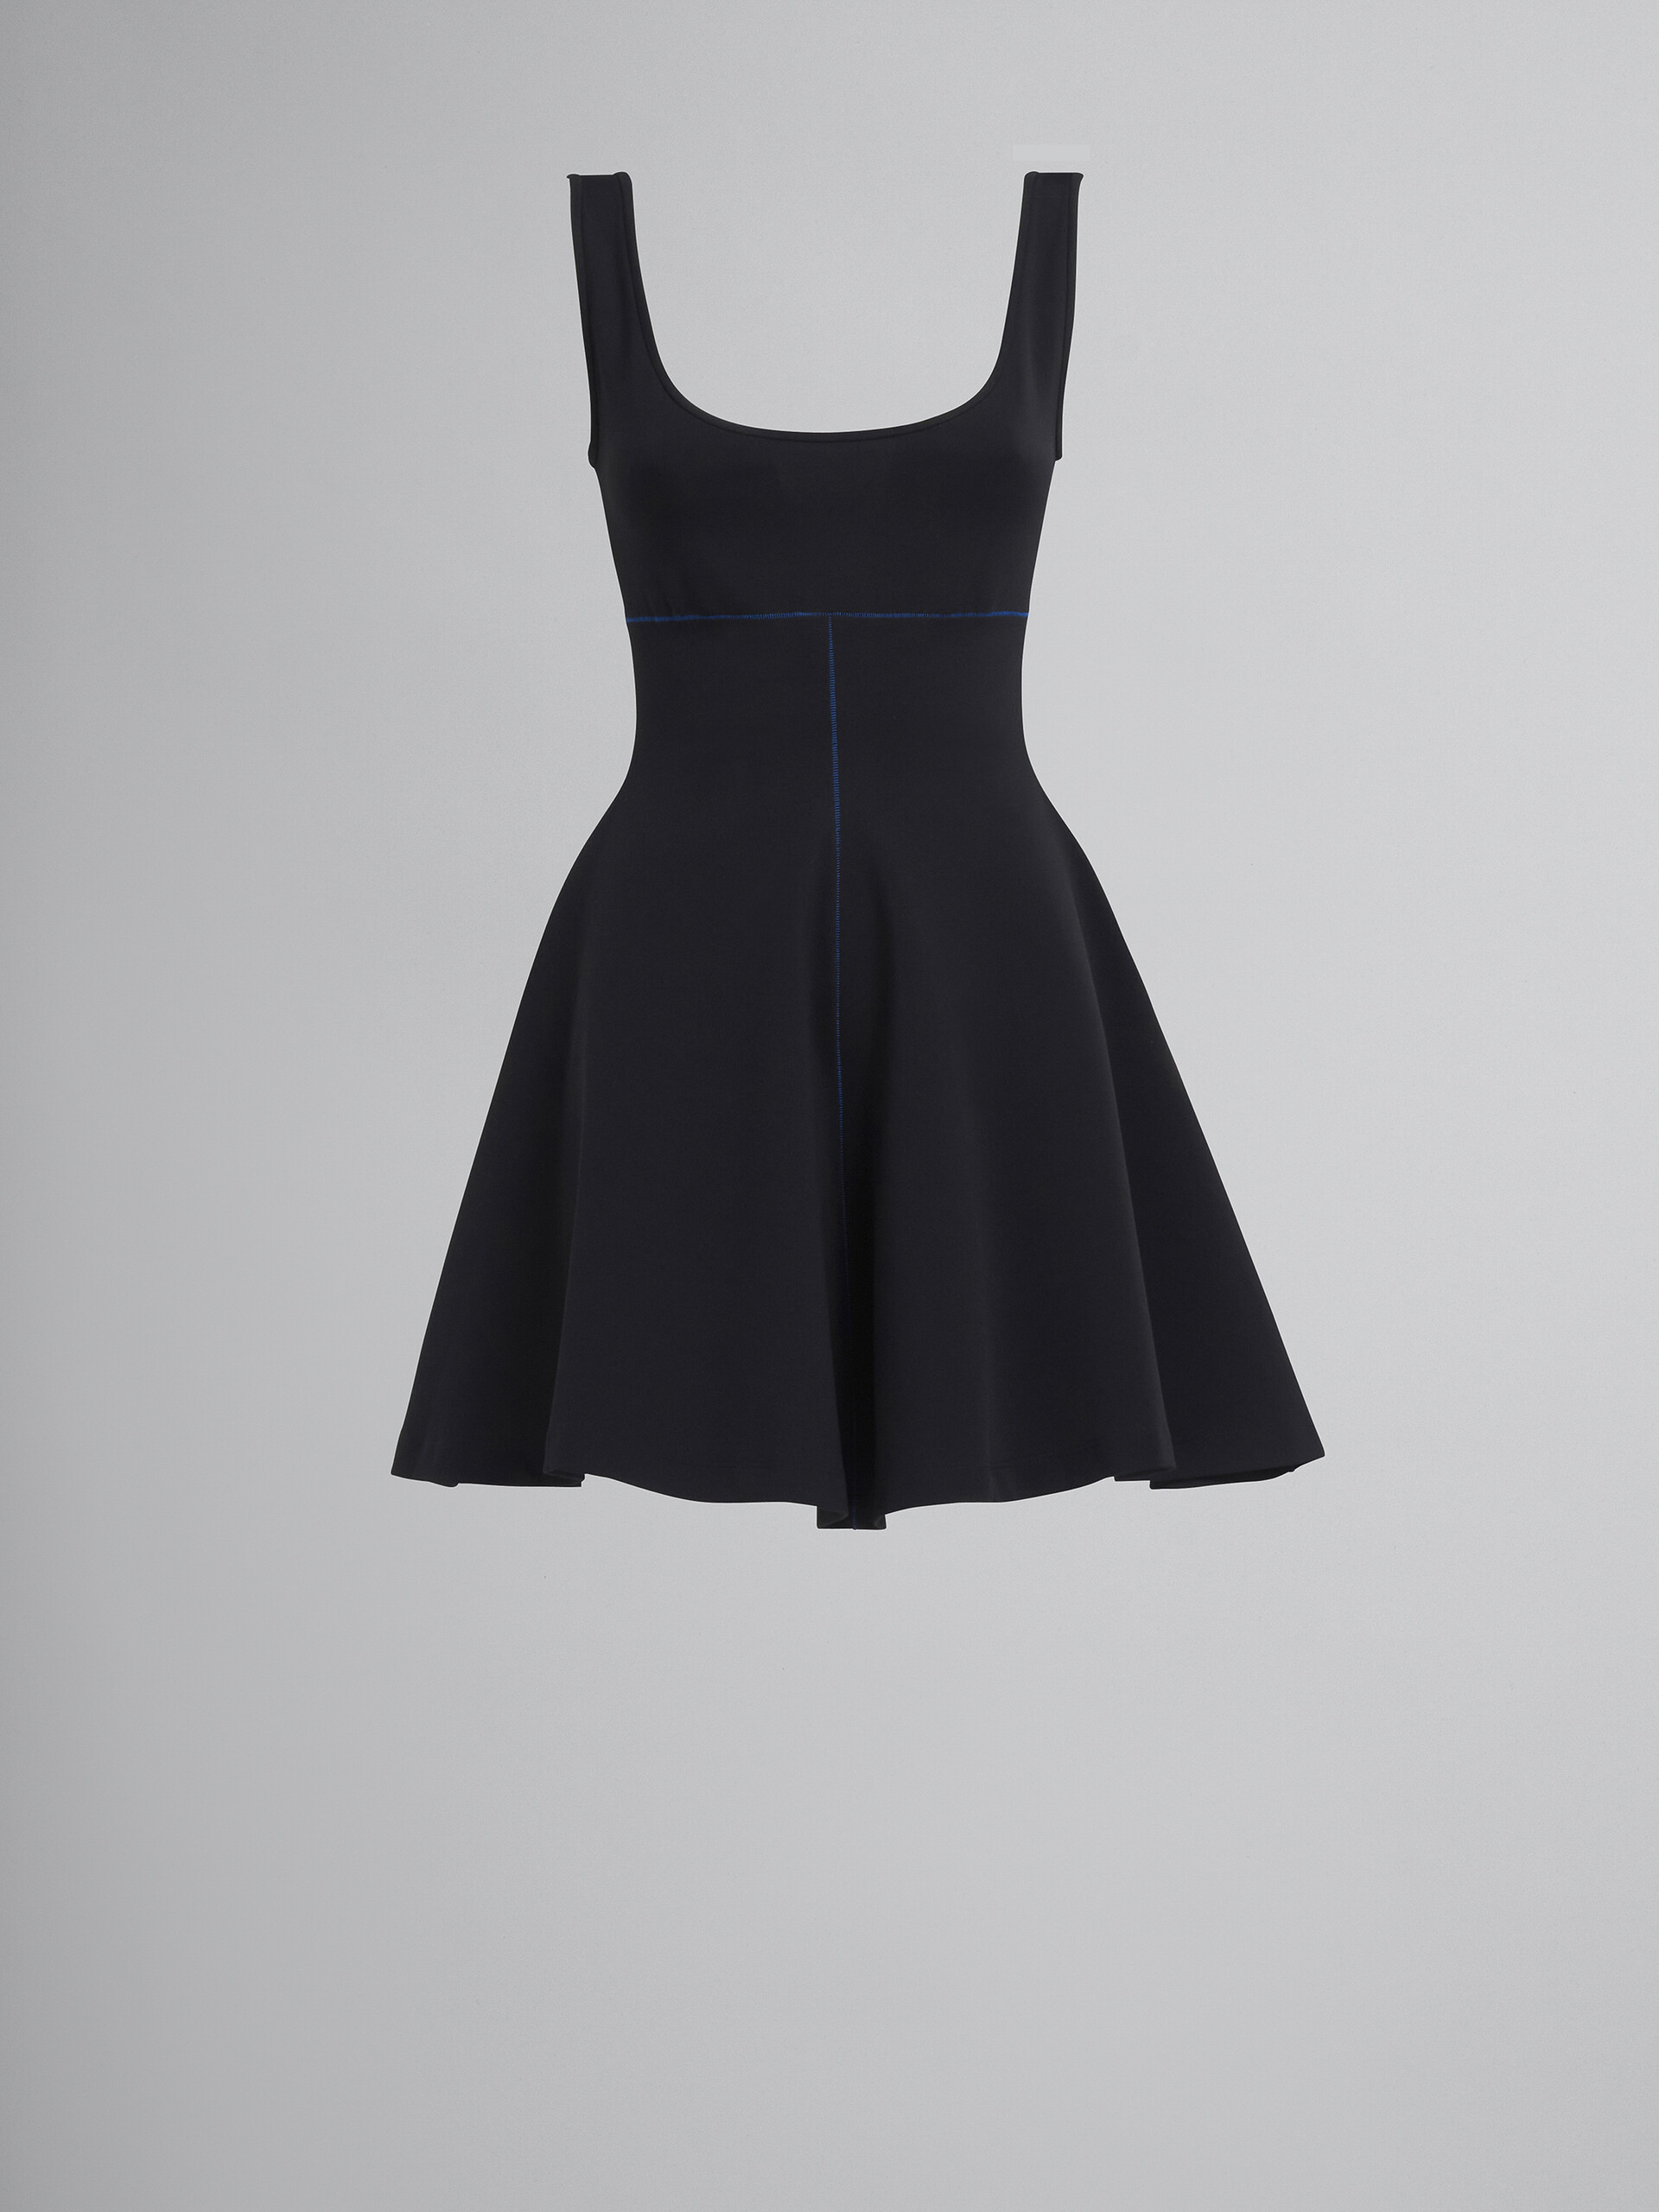 Short dress in black stretch fabric - Dresses - Image 1